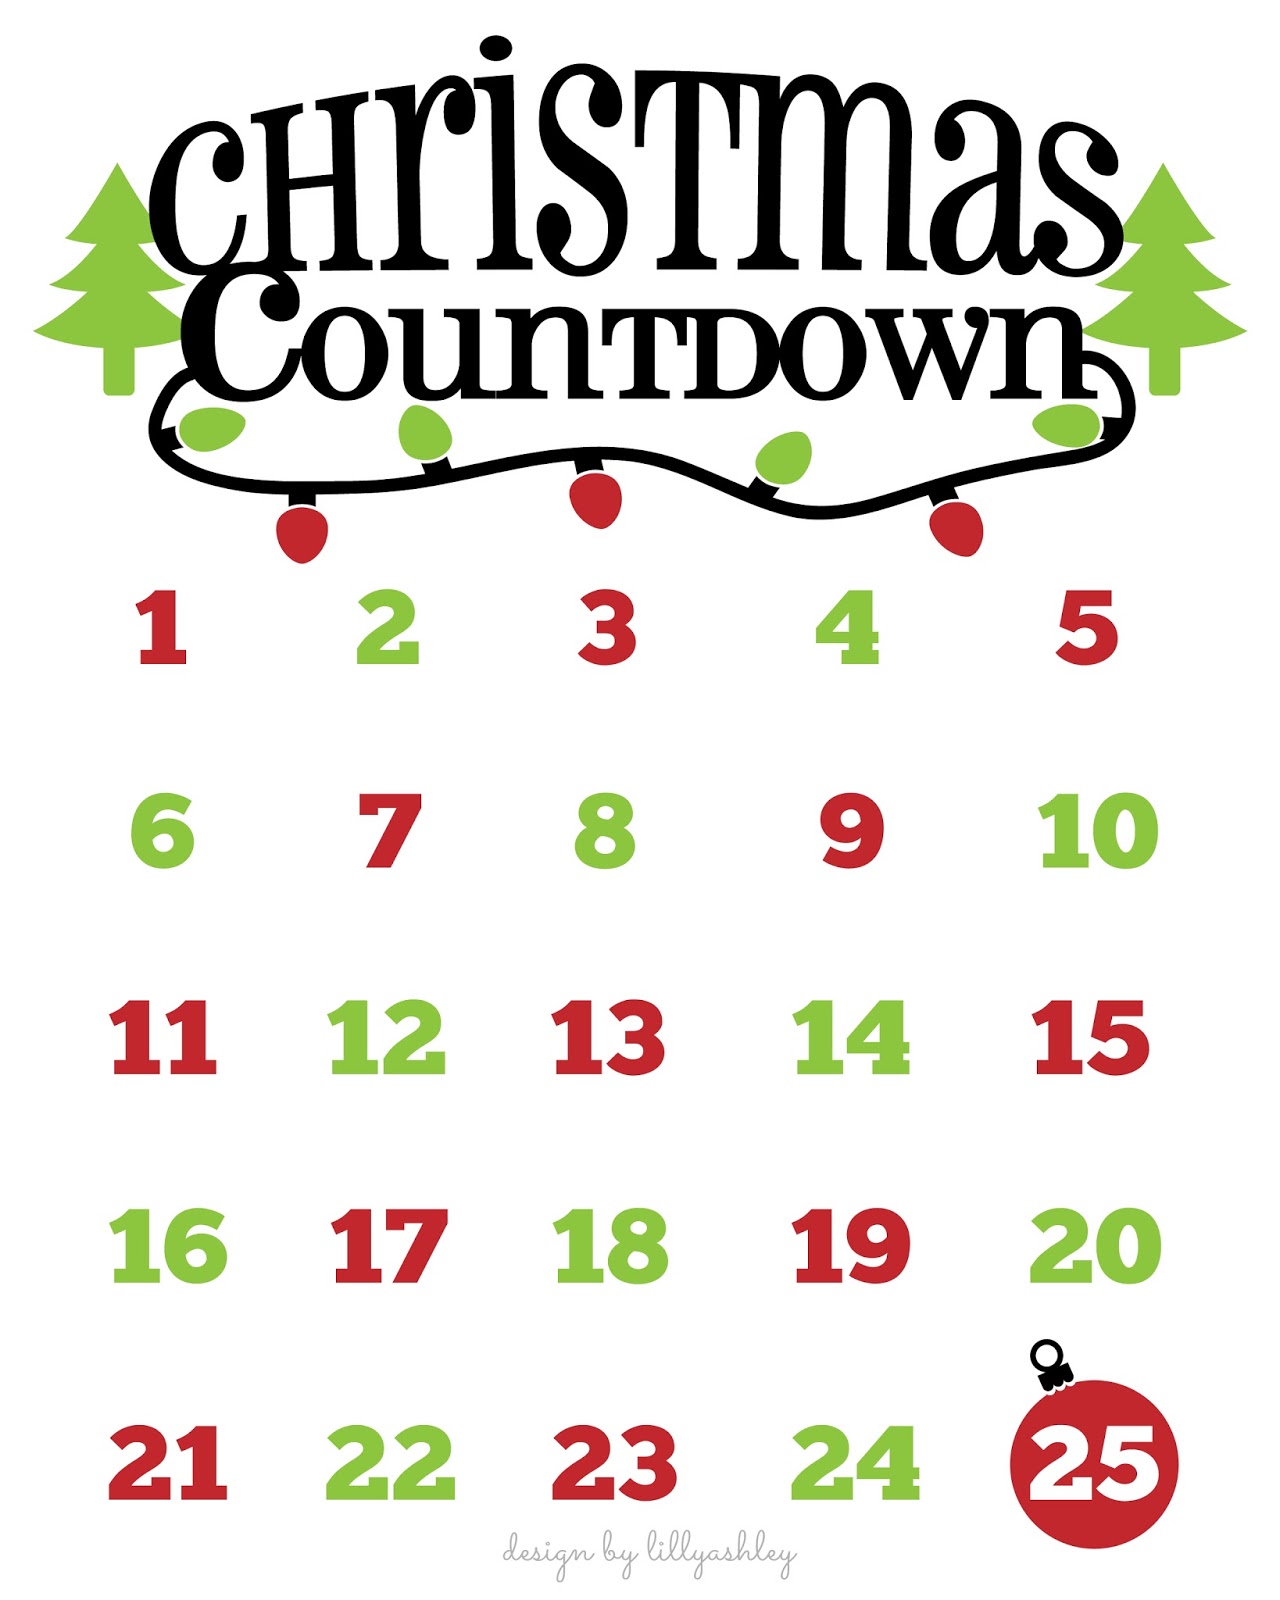 make-it-create-by-lillyashley-freebie-downloads-christmas-countdown